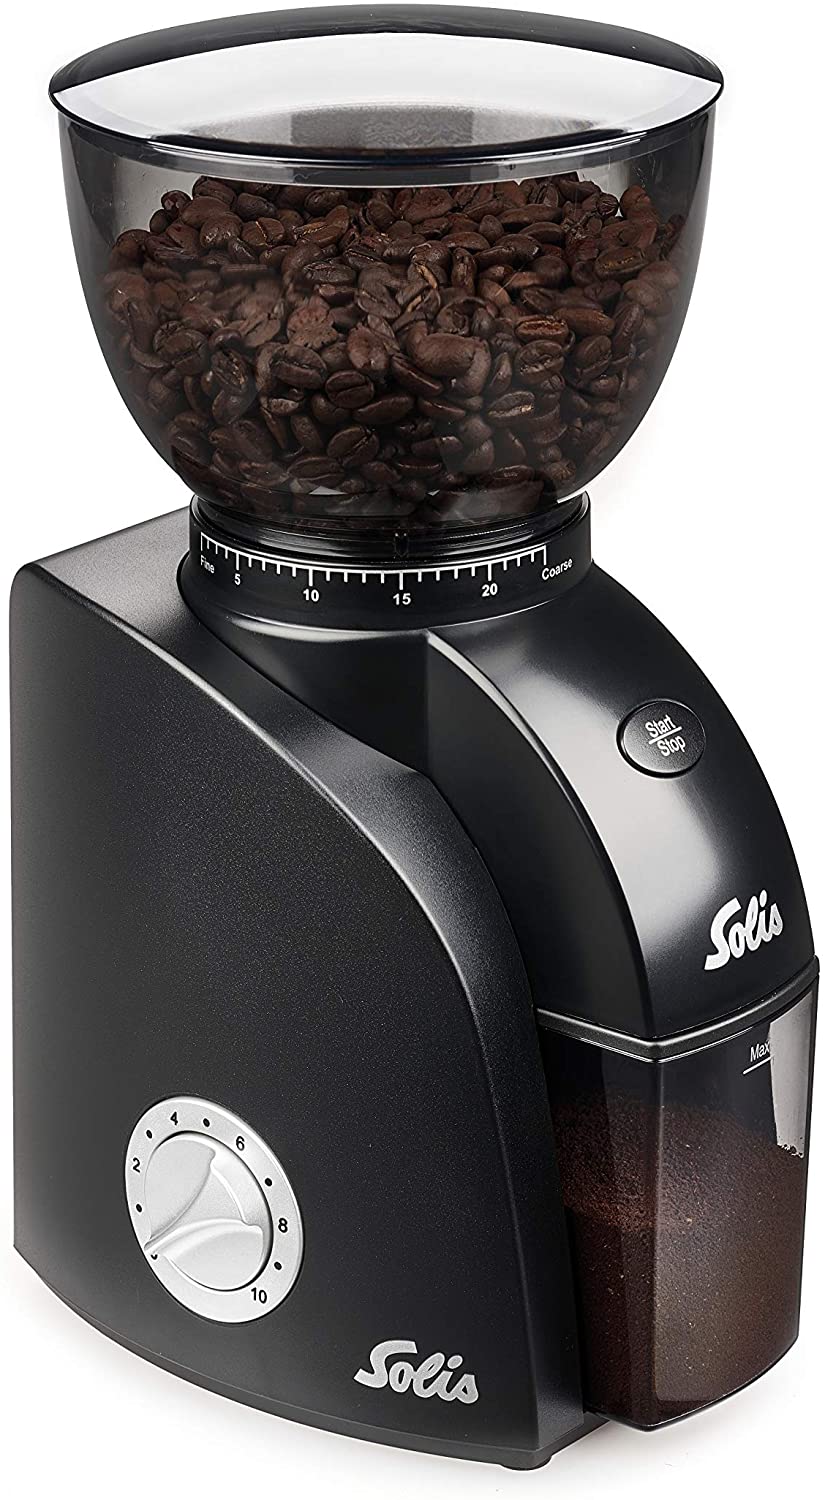 Solis Scala Zero Static 1662 Electric Coffee Grinder - Coffee Grinder - 24 